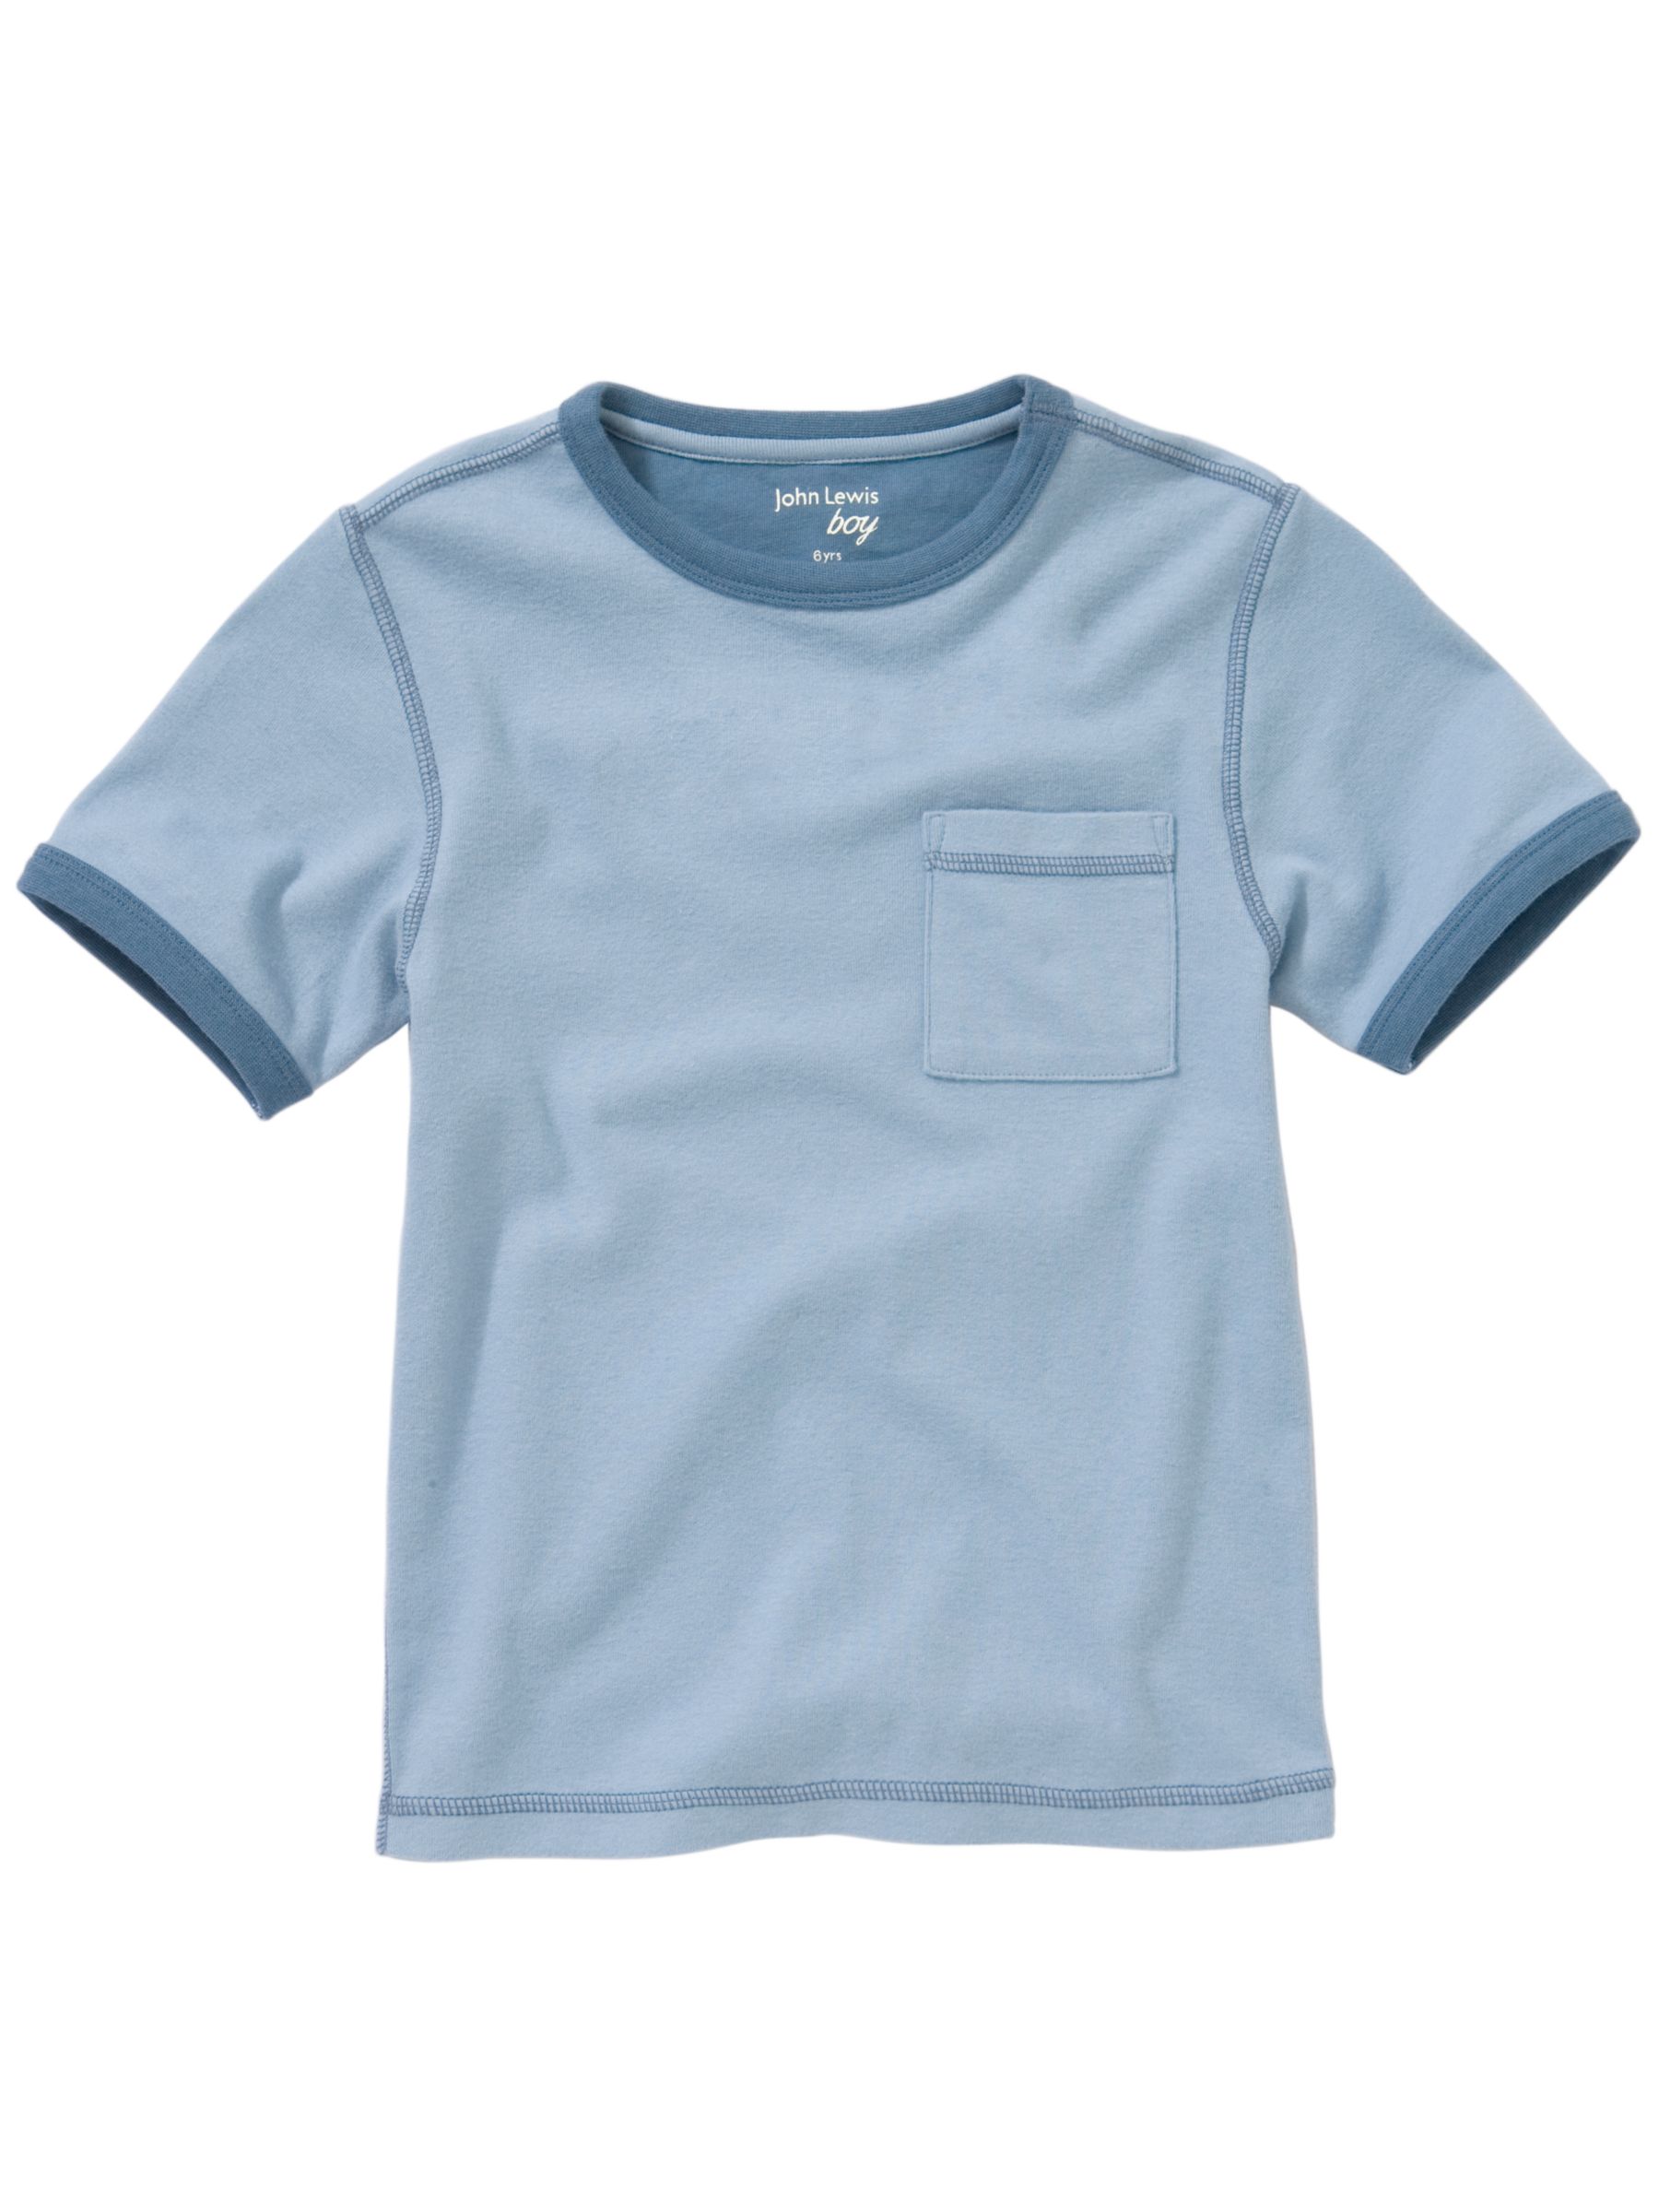 John Lewis Boy Short Sleeve T-Shirt, Blue, 2 years